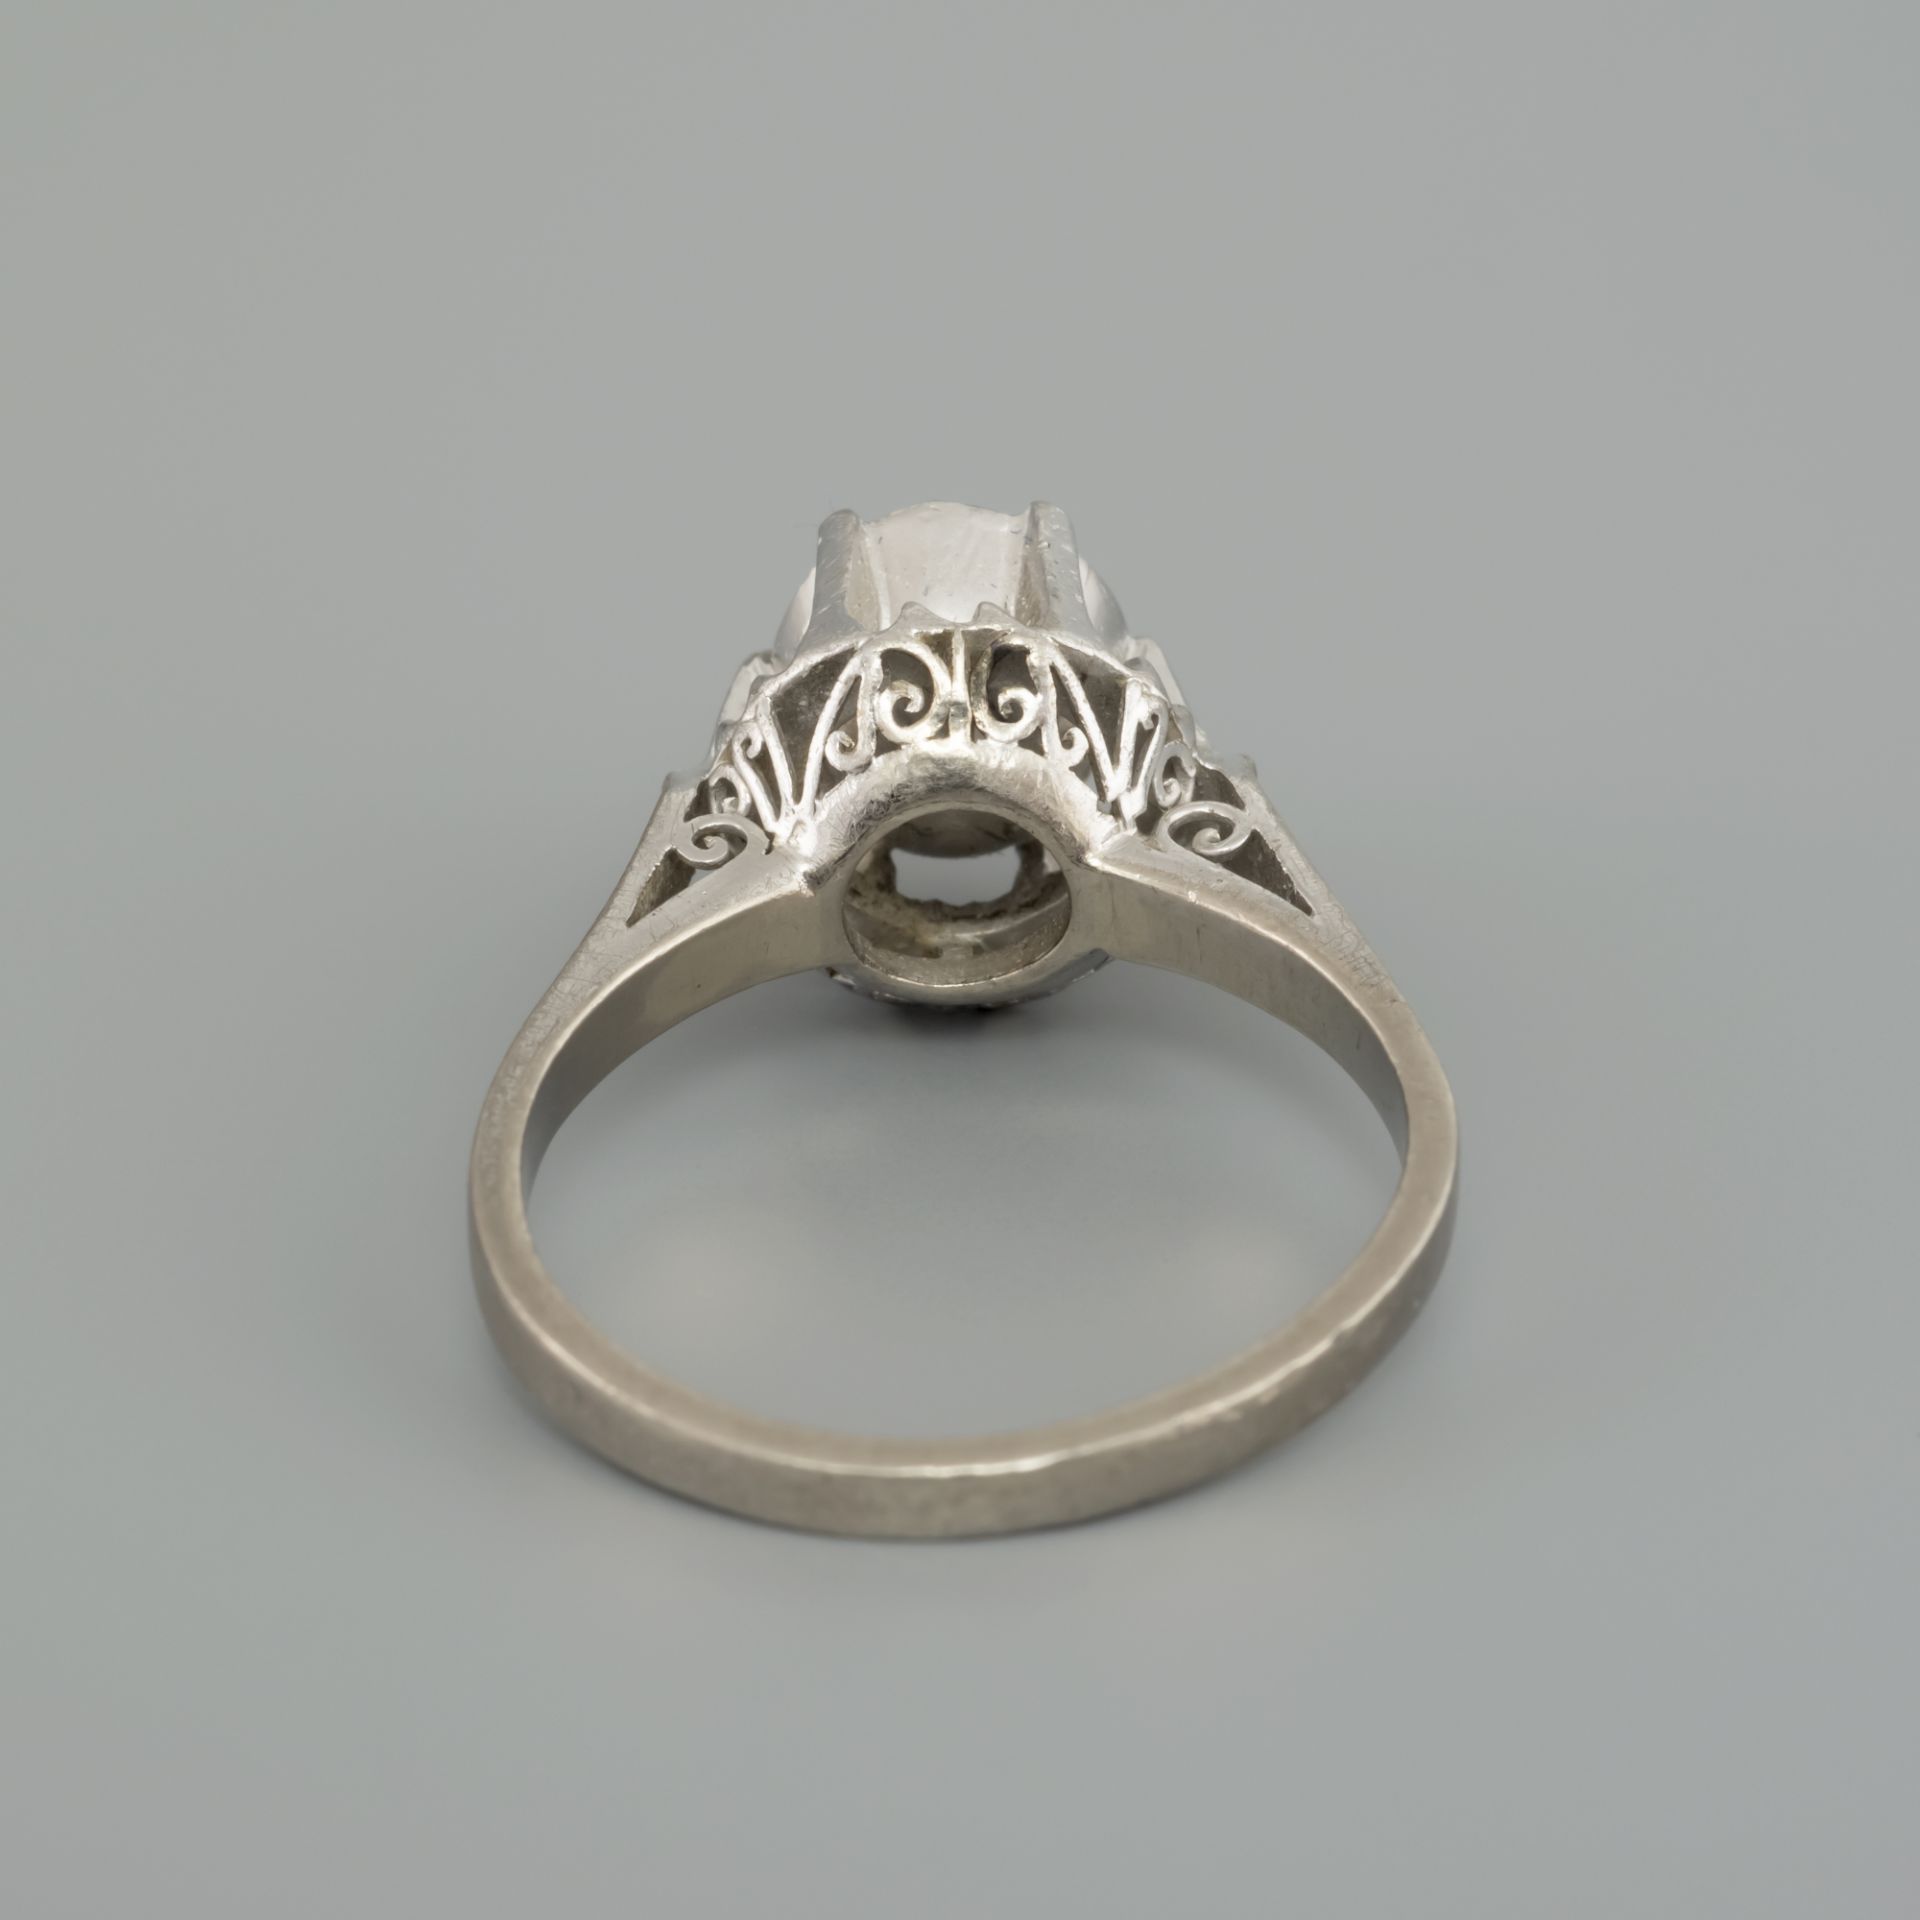  Ring  - Image 3 of 3